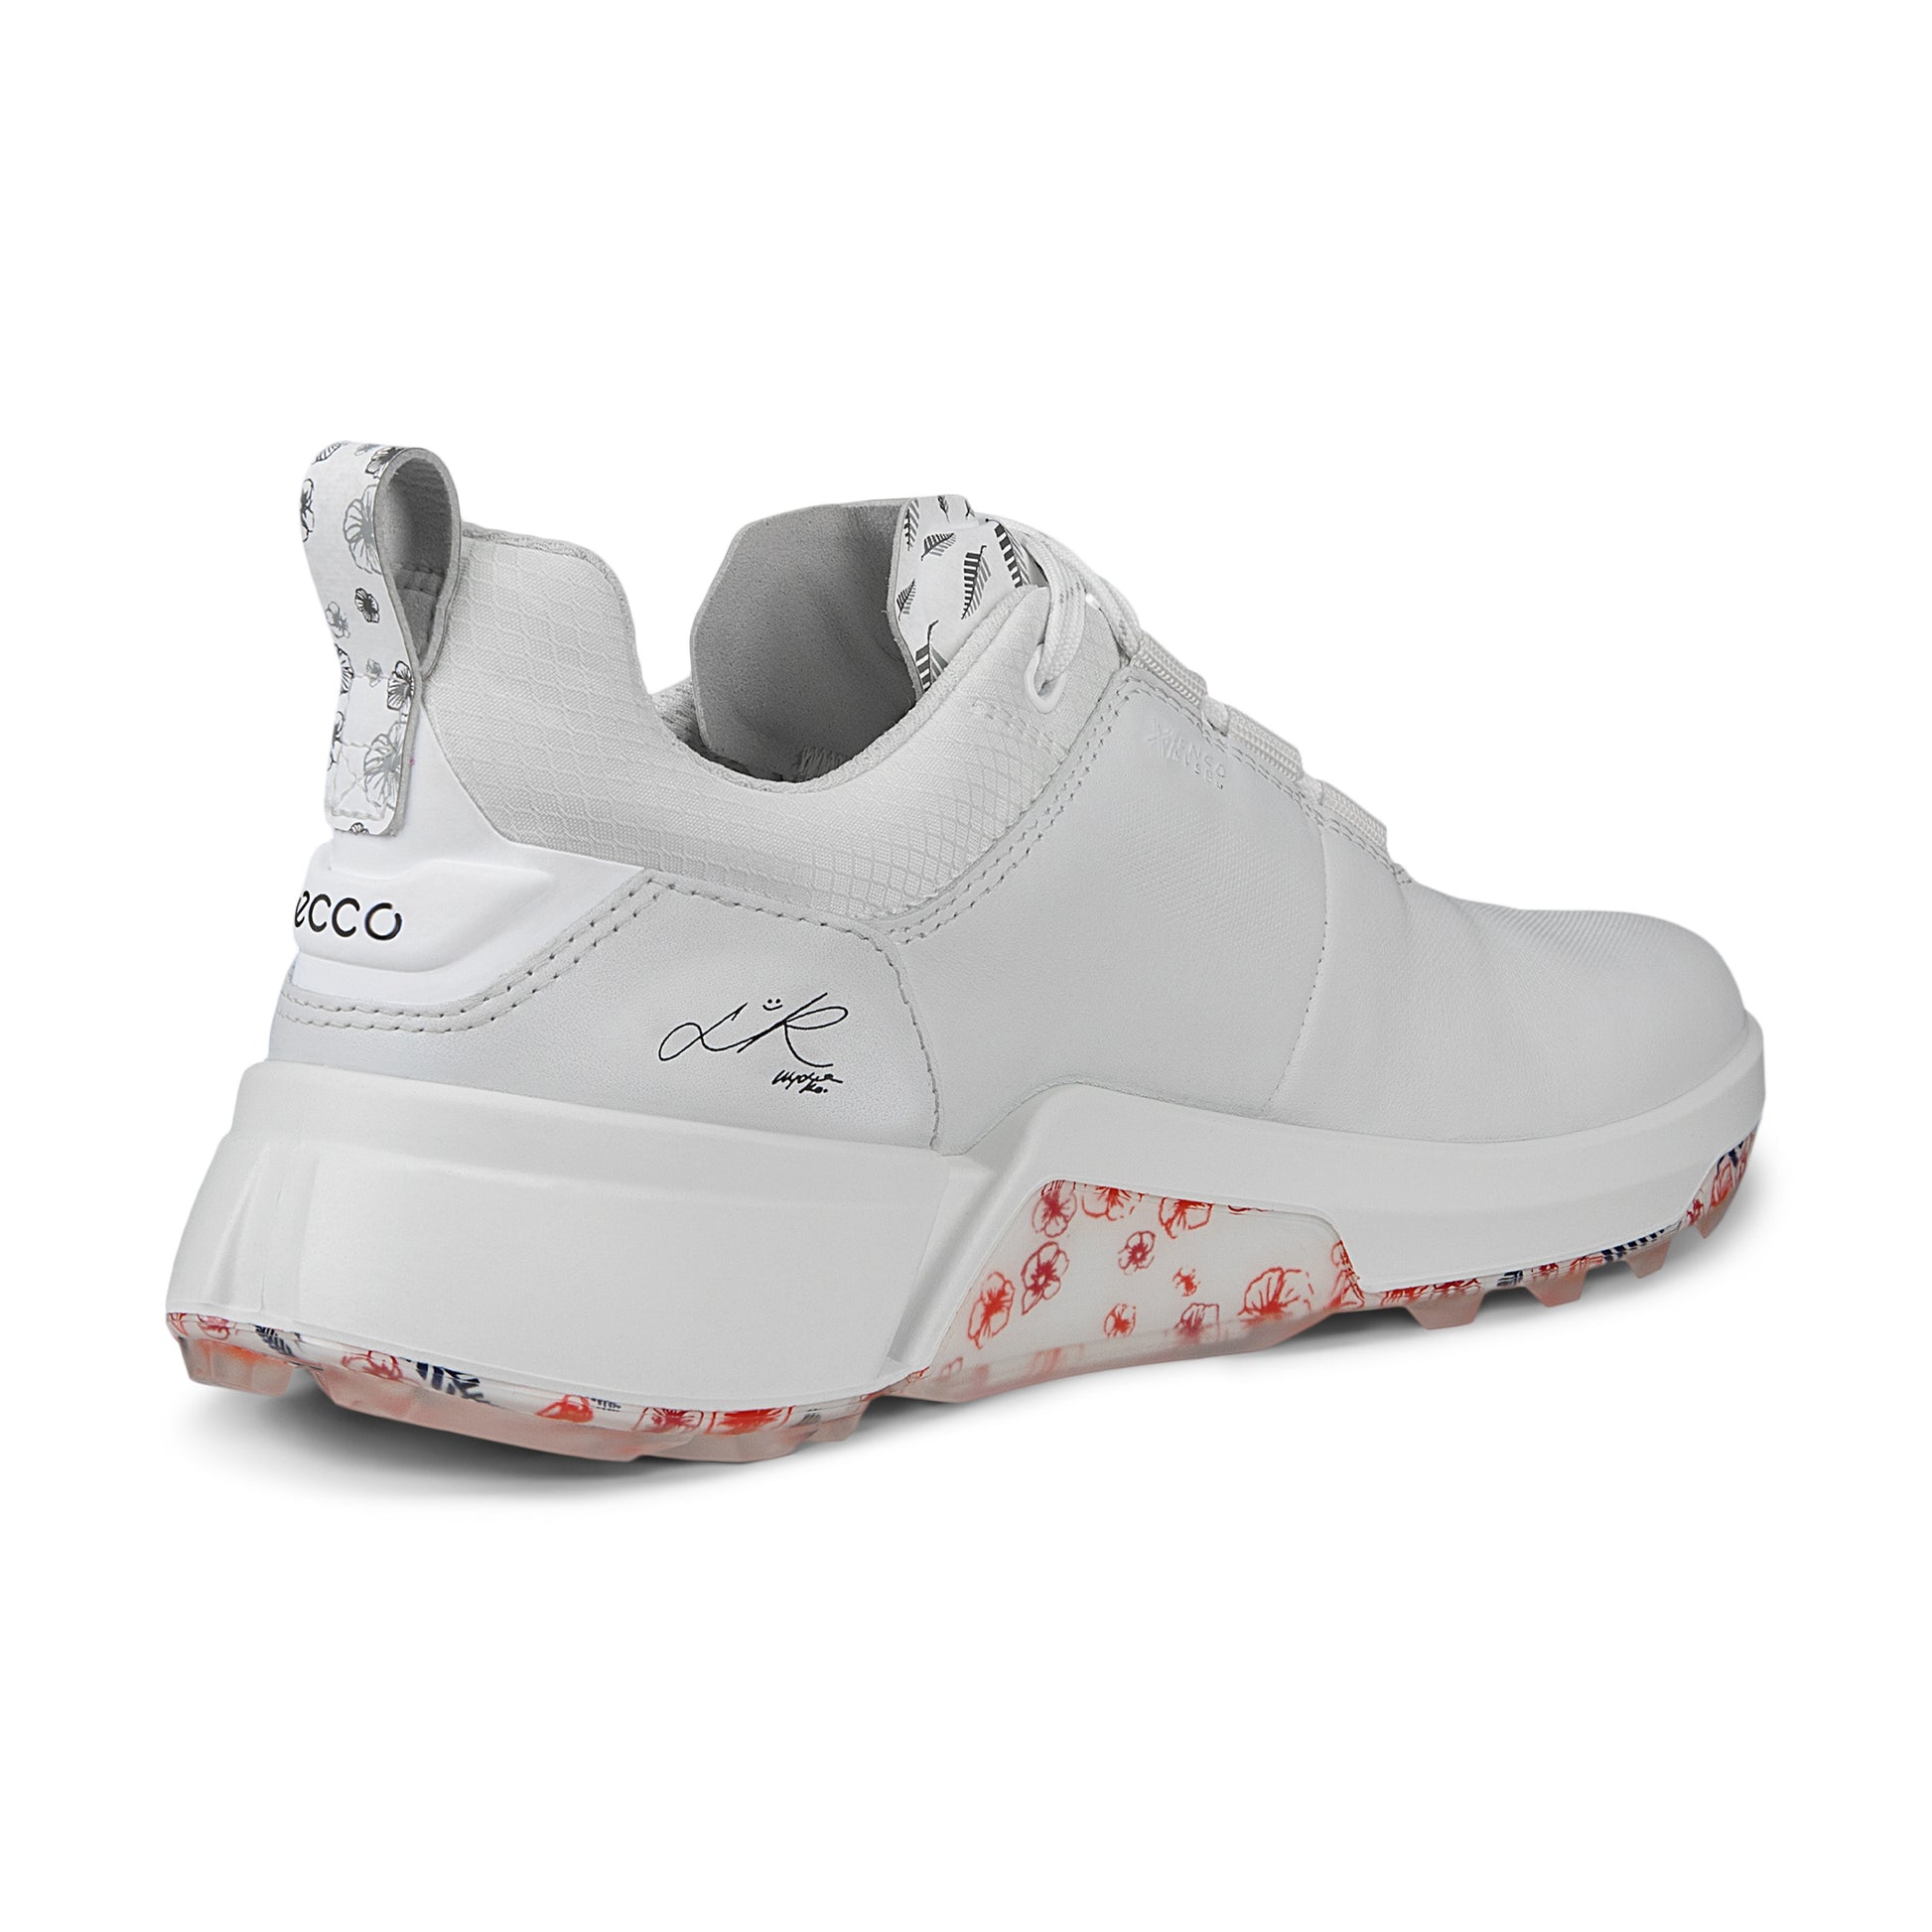 ECCO Women's BIOM H4 Lydia Ko Golf Shoe with GORE-TEX in White